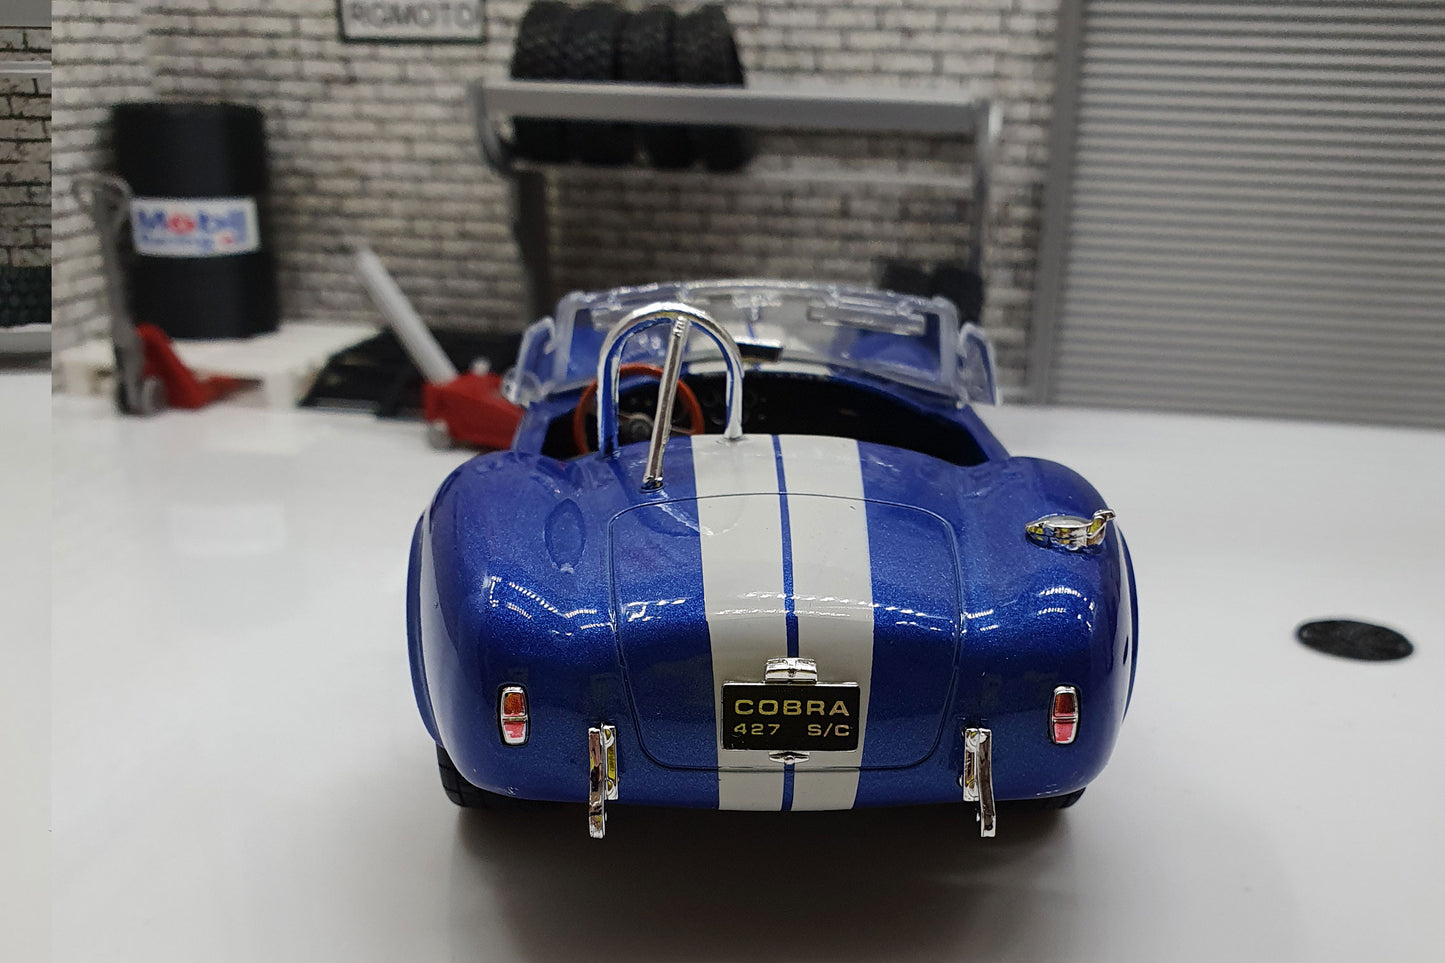 Shelby Cobra 427SC - Blue  1:24 Scale